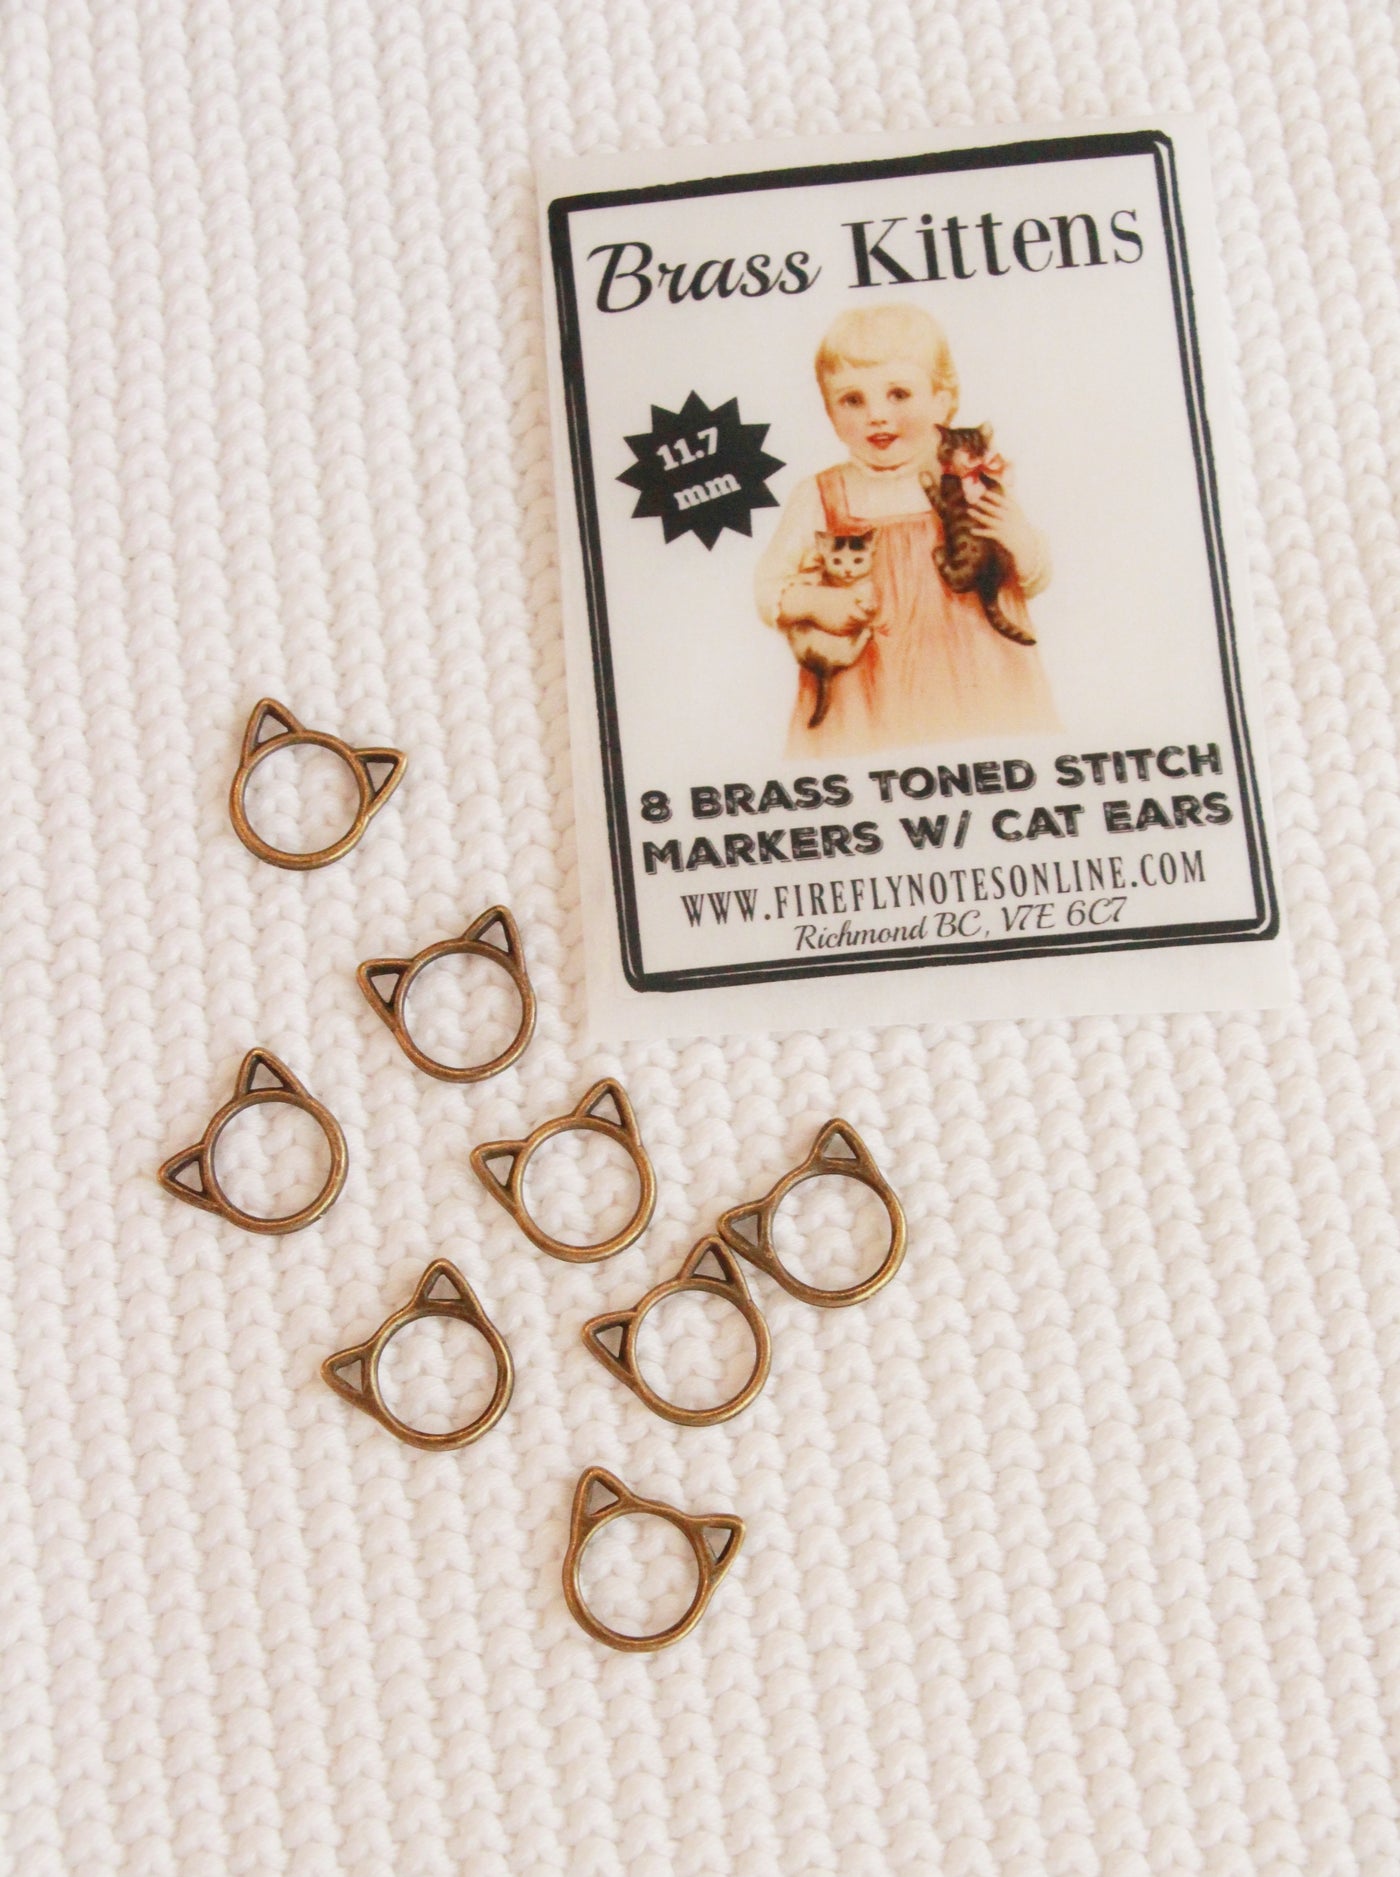 Brass Kittens Stitchmarkers